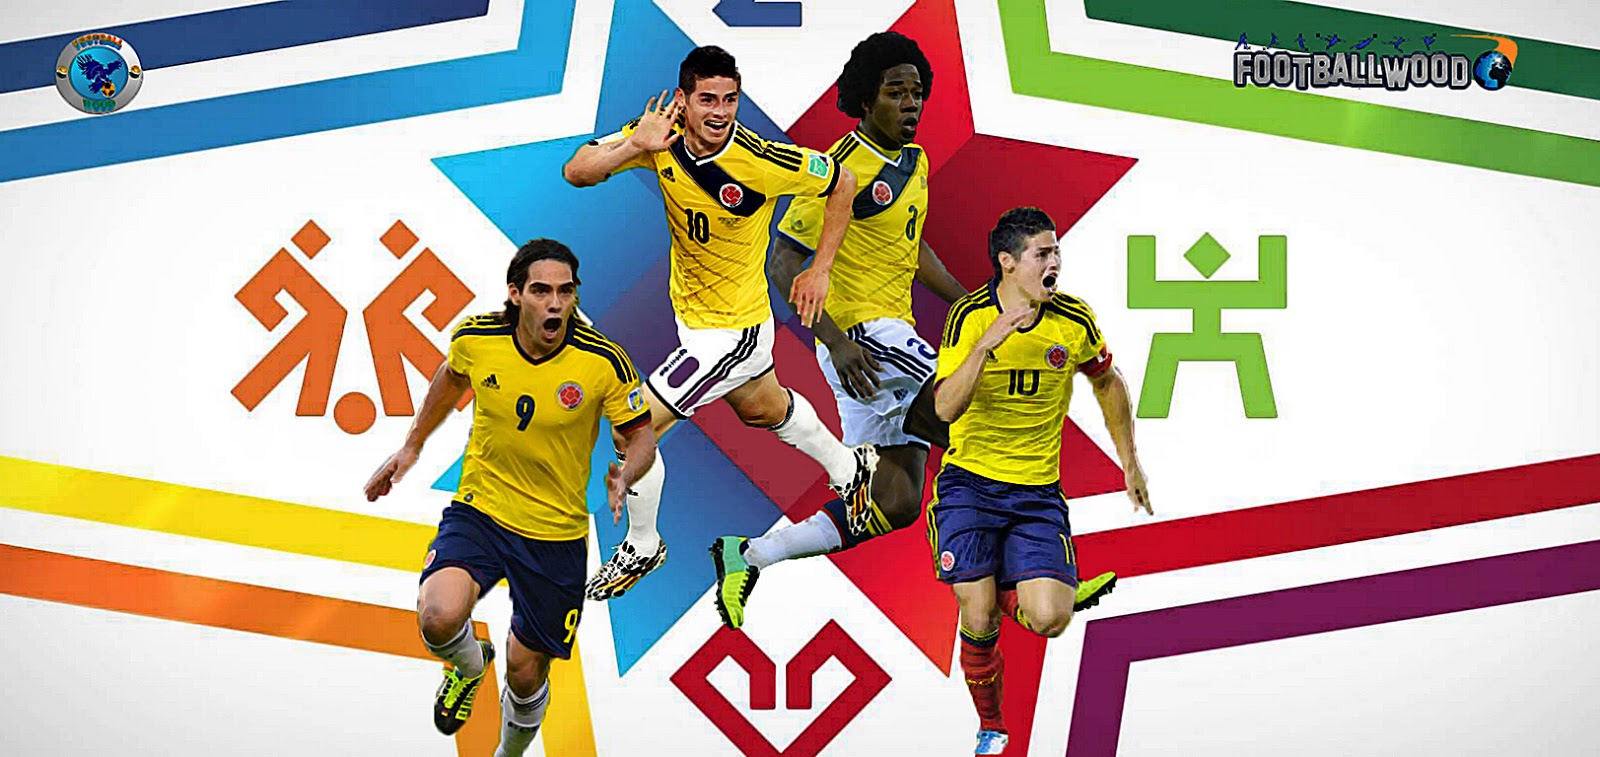 Copa America Colombia Wallpaper Image Photos